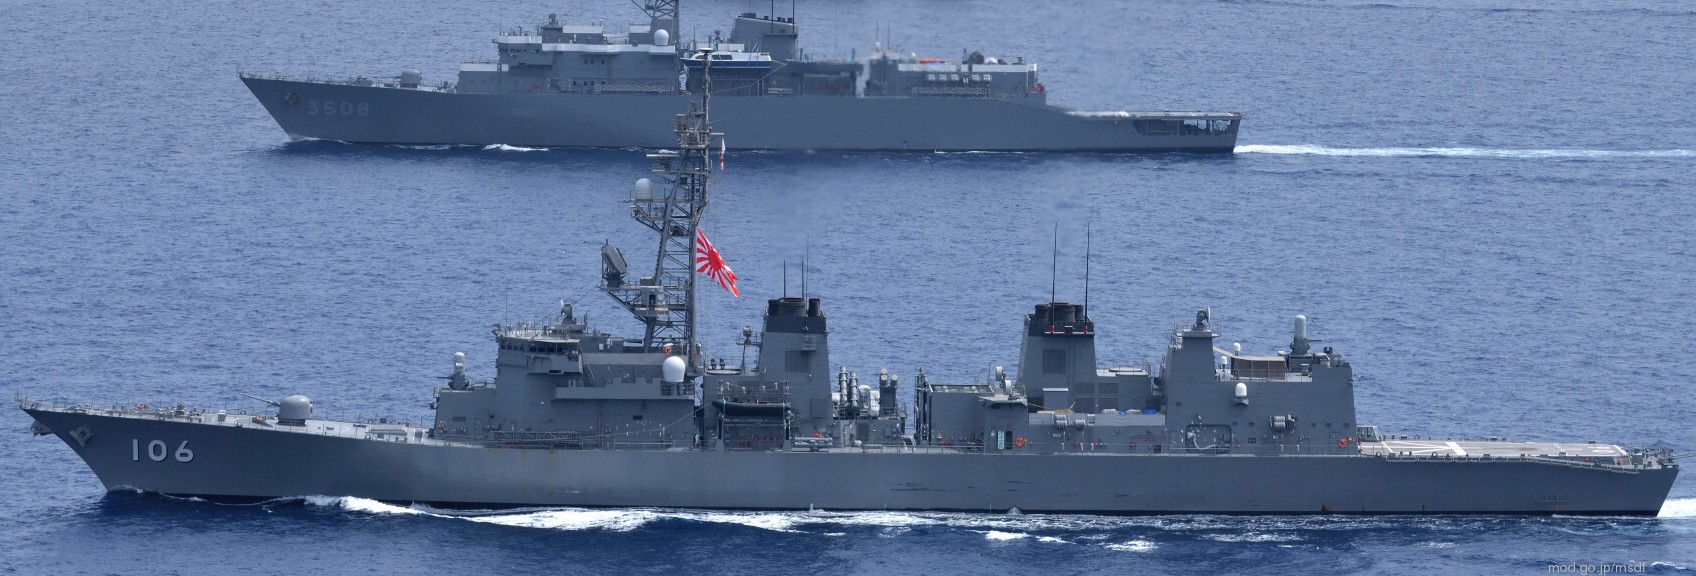 dd-106 js samidare murasame class destroyer japan maritime self defense force jmsdf 37